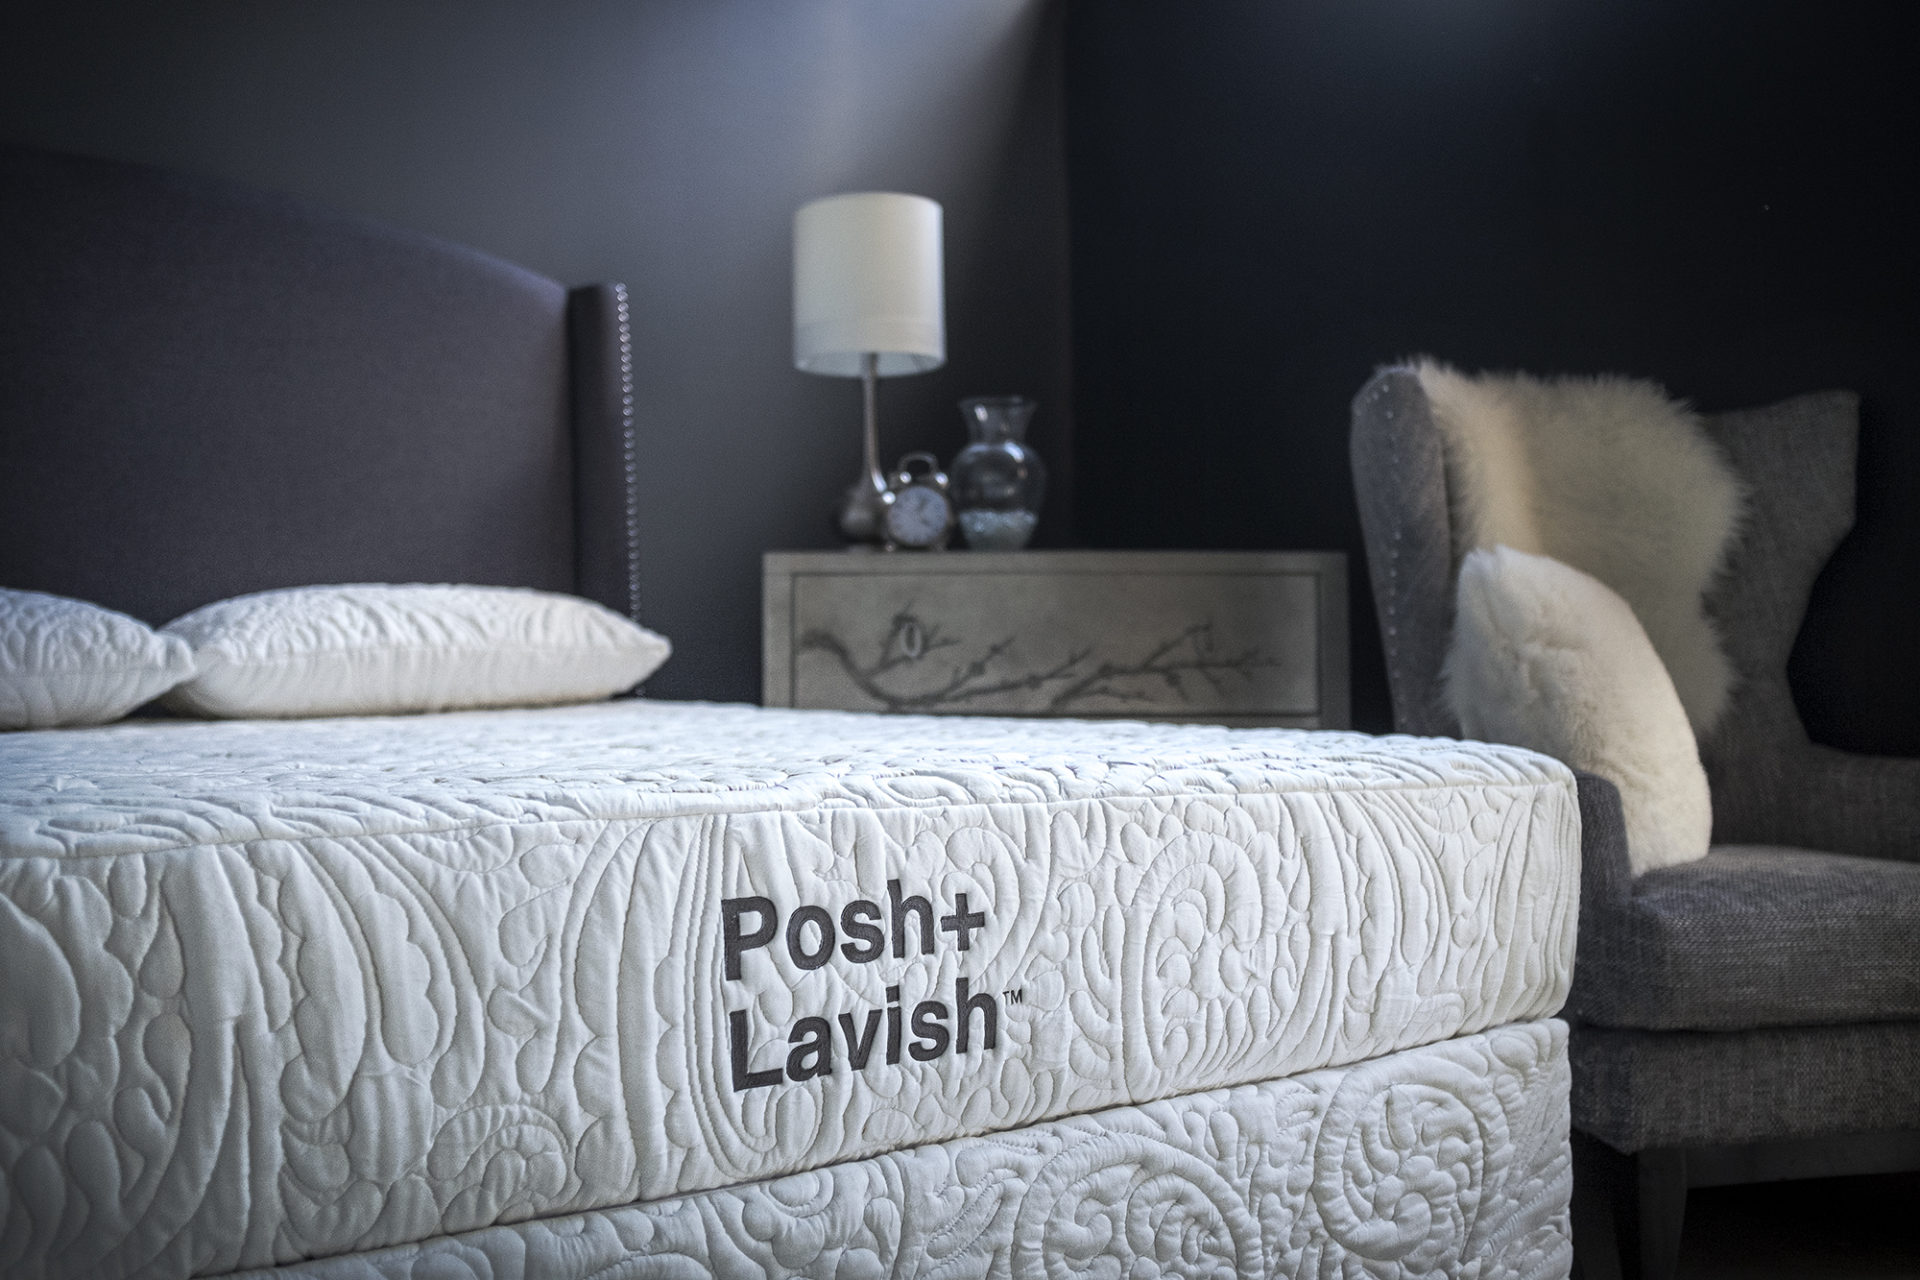 Posh & Lavish Restore mattress